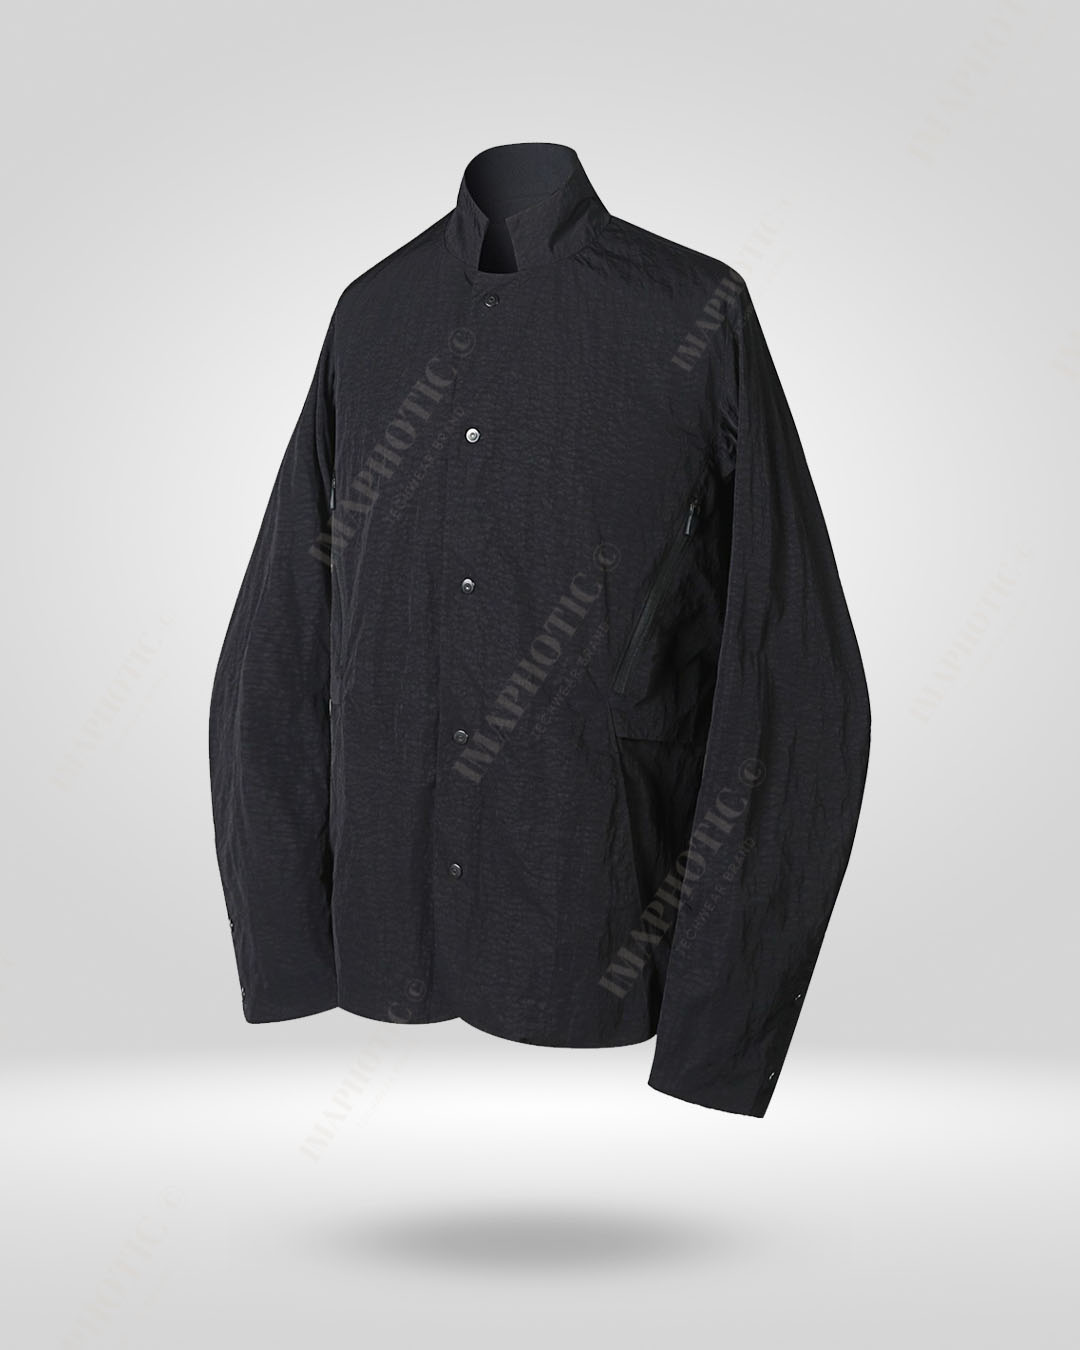 Sleek Black Shirt Jacket for Men